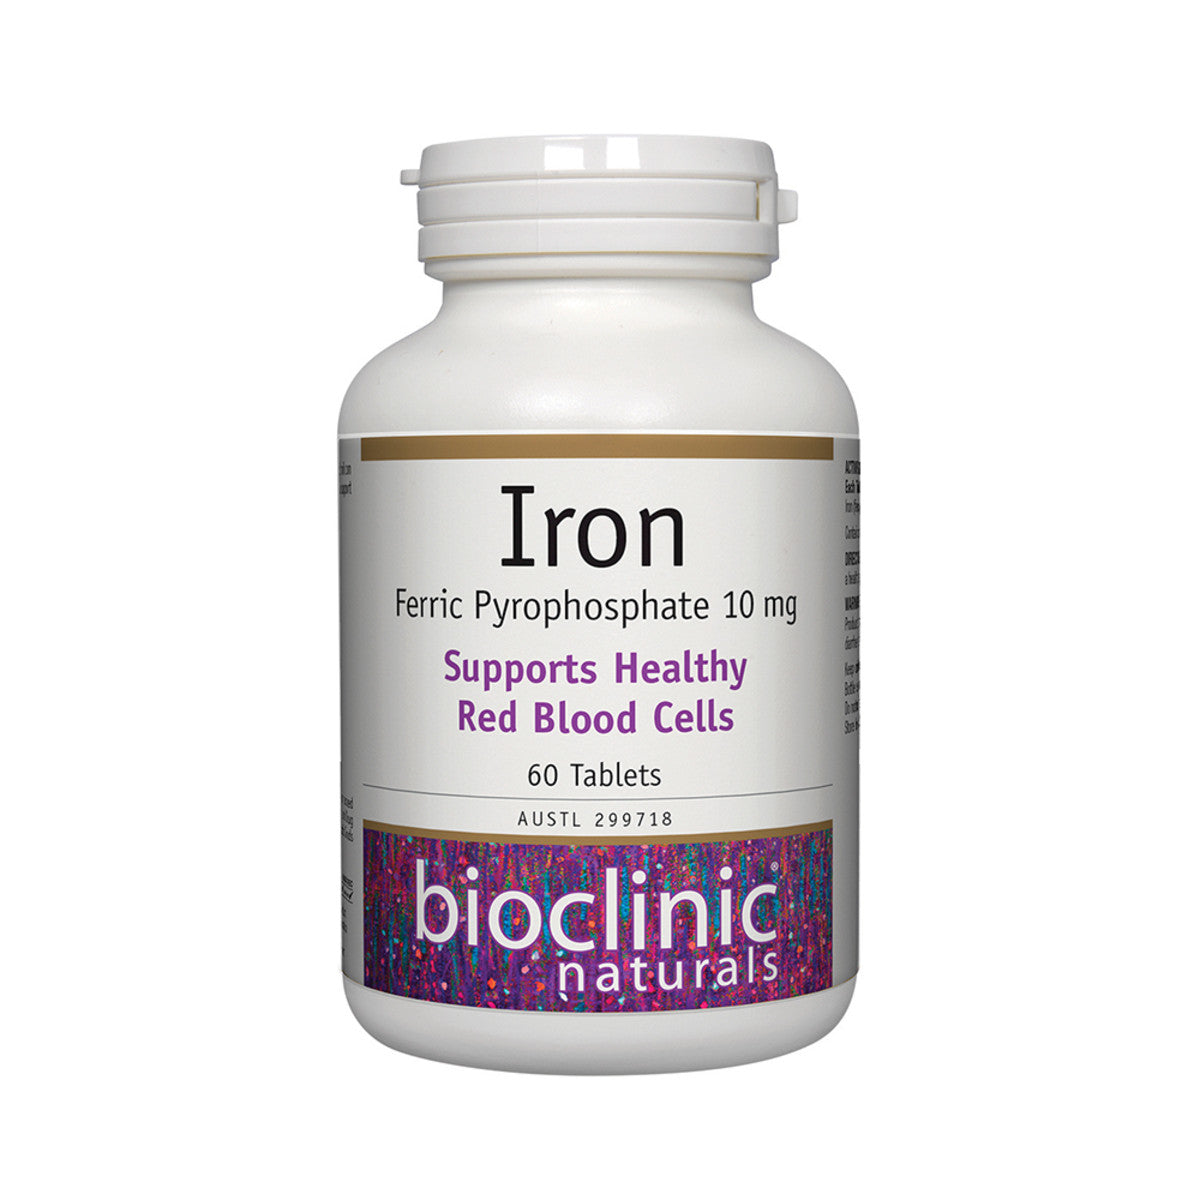 Bioclinic Naturals - Iron 10mg